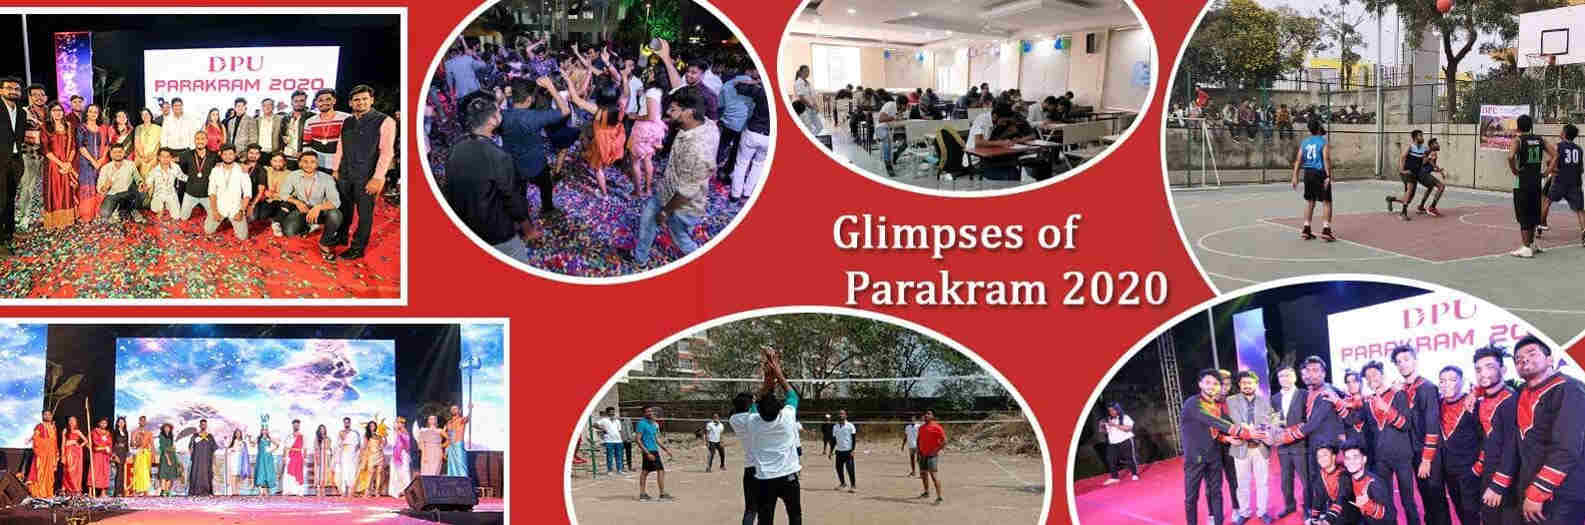 Glimpses of Parakram 2020